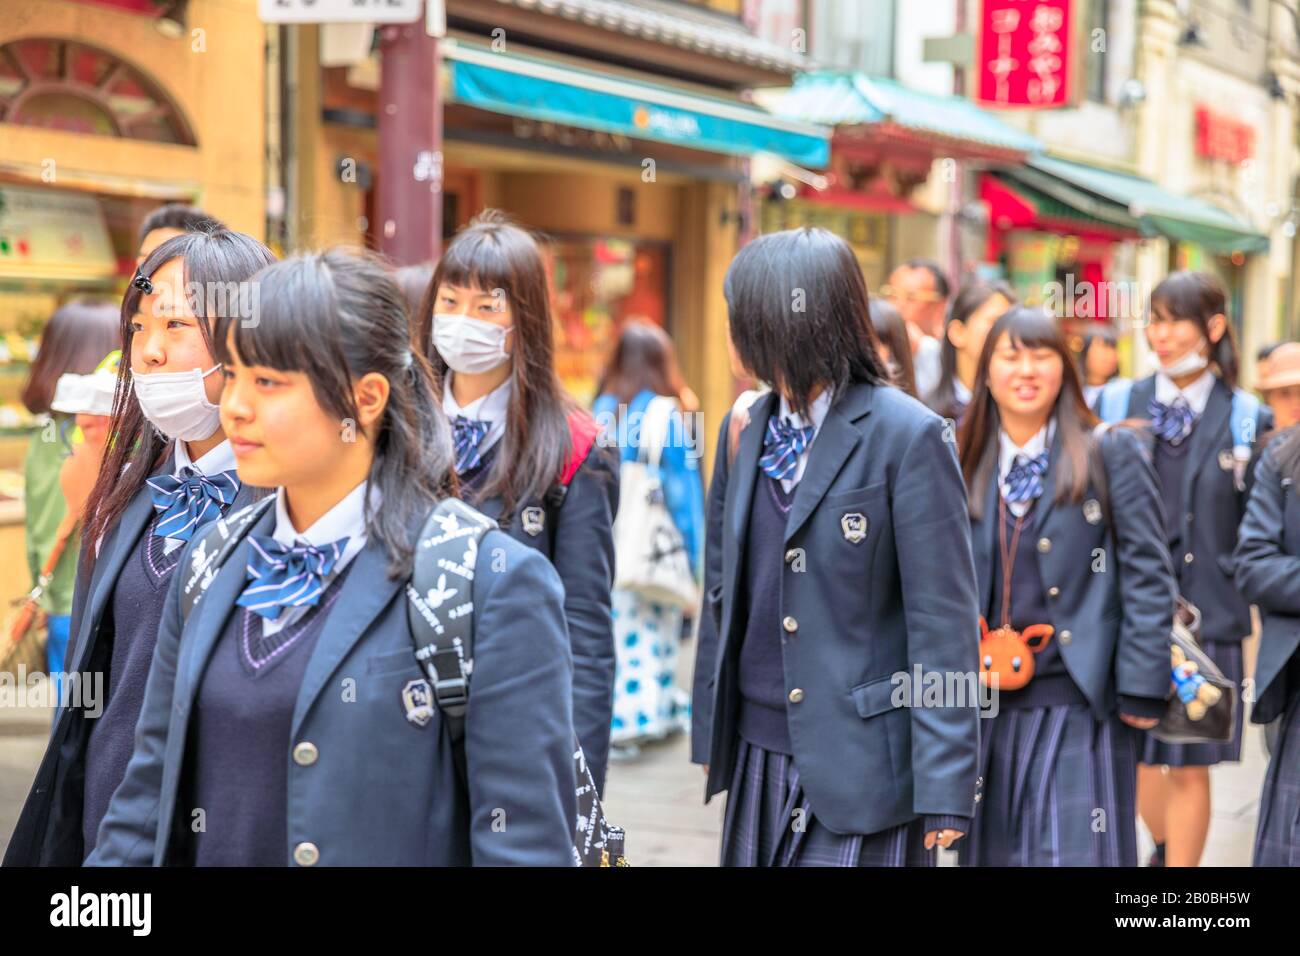 Yokohama, Japan - April 21, 2017: group of asian girls in school uniform wear a mask while walking in the heart of Yokohama Chinatown, the Japan's Stock Photo